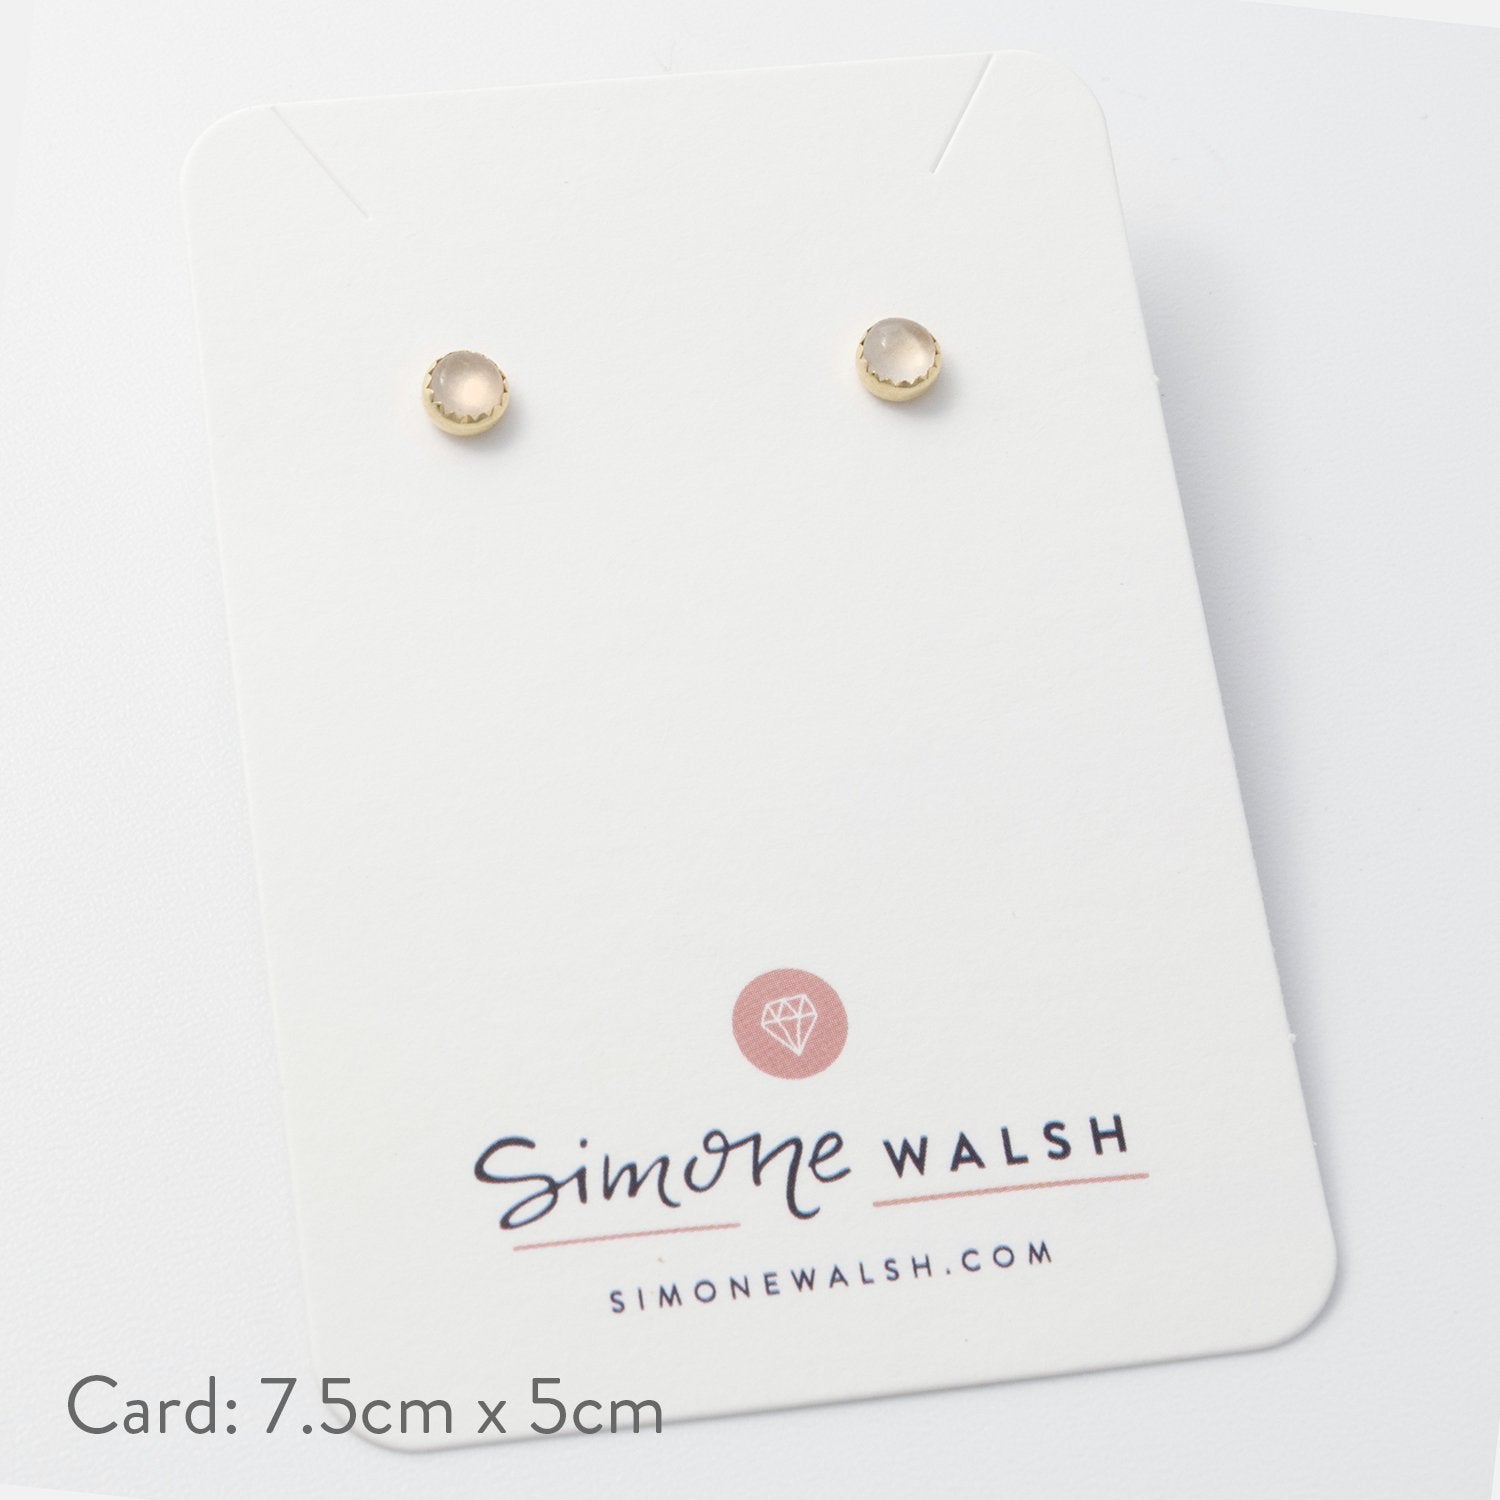 Rose quartz & solid gold stud earrings - Simone Walsh Jewellery Australia